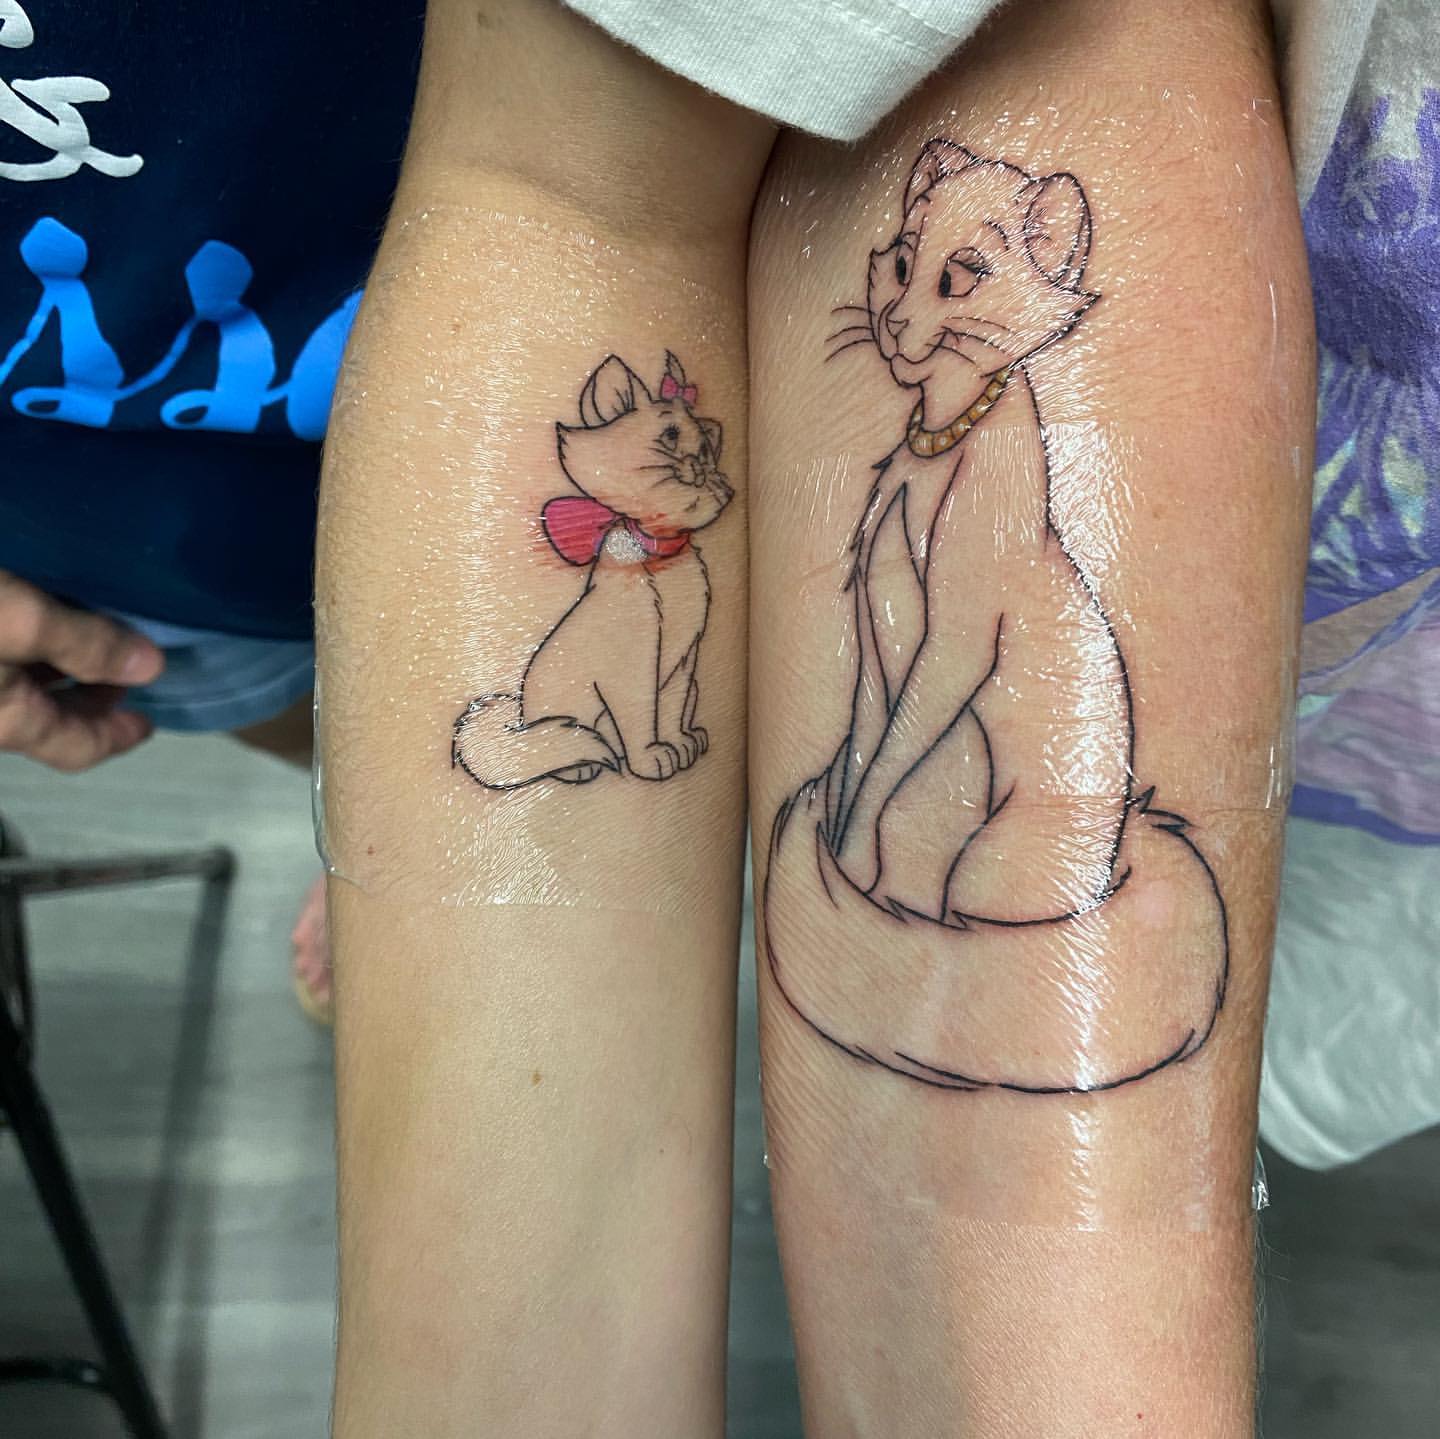 Matching Tattoo Ideas, Mother Daughter Tattoos